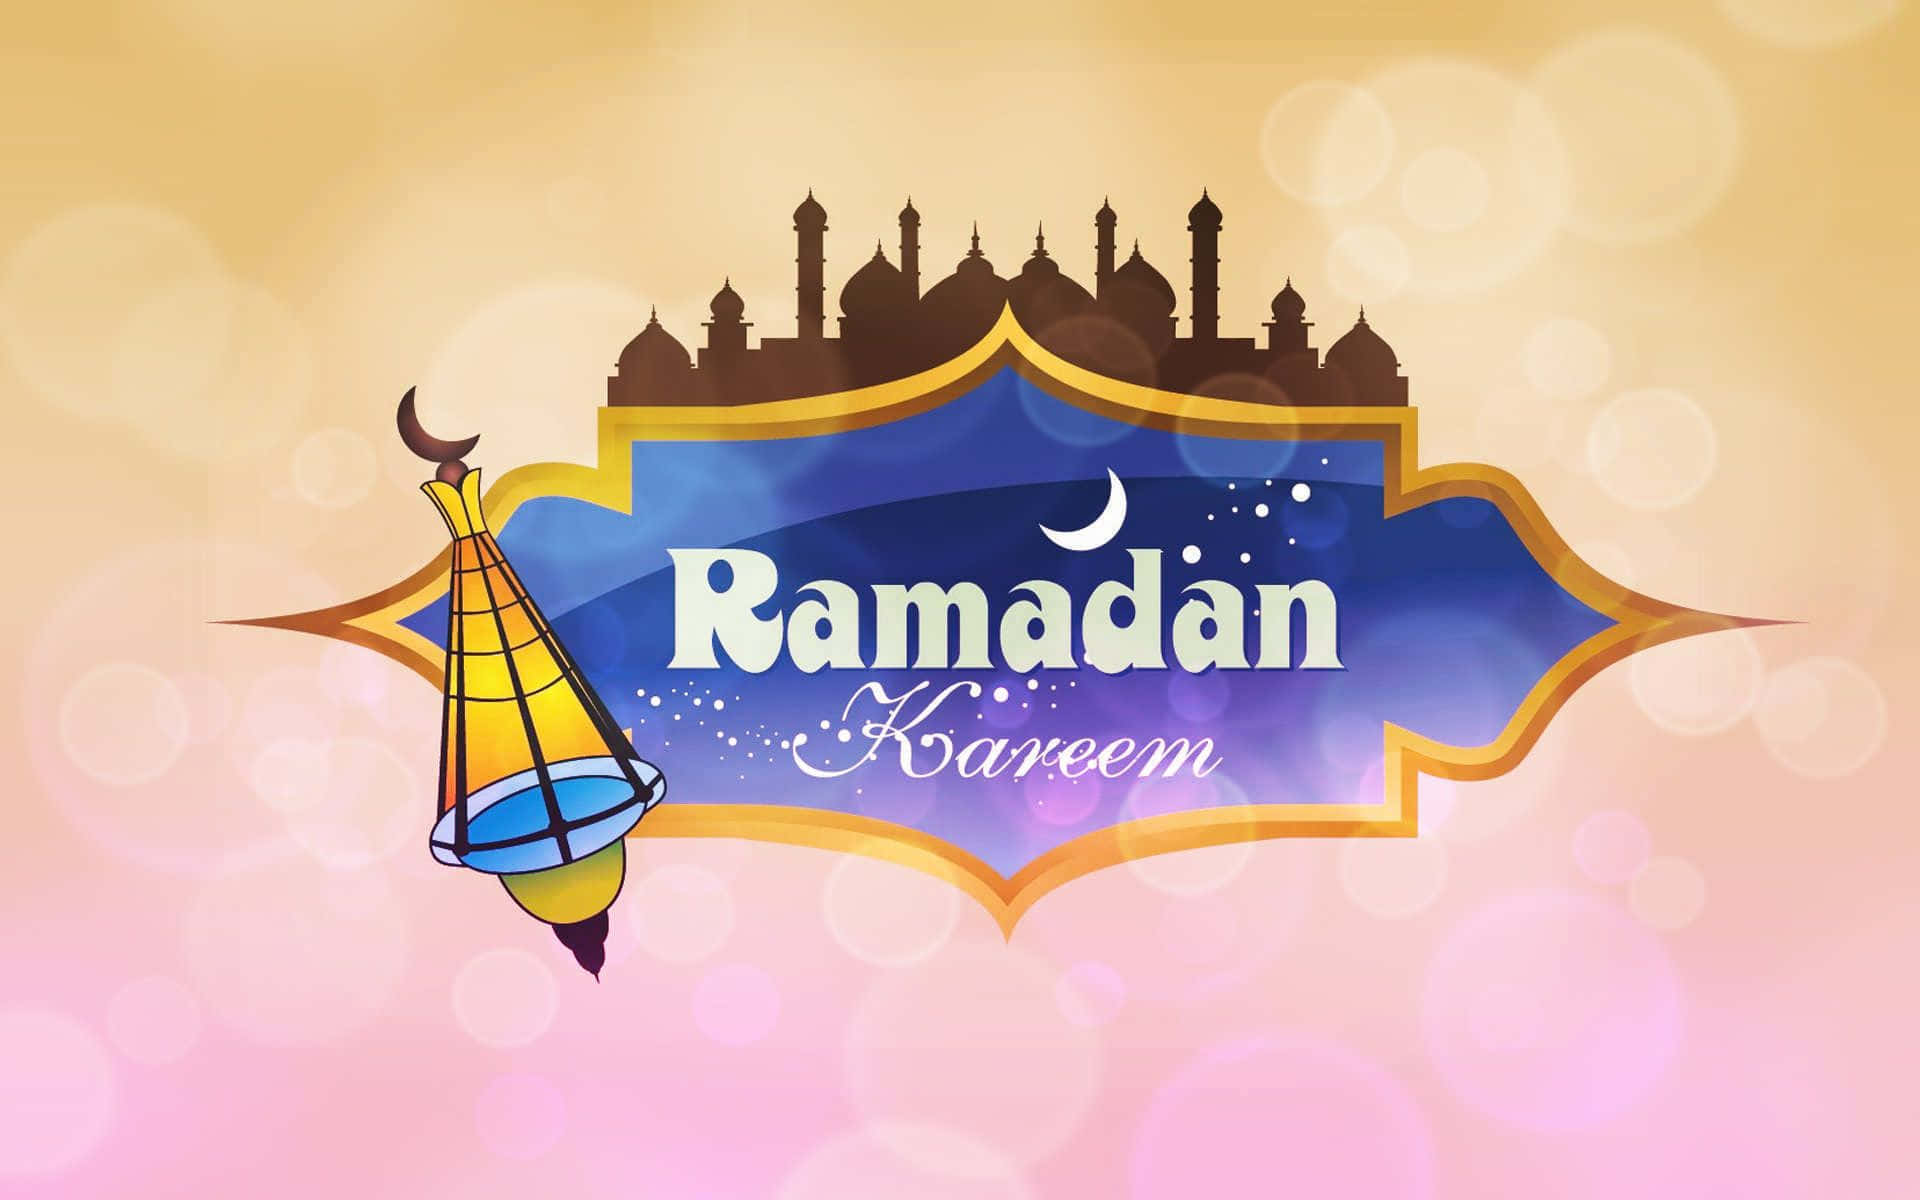 Happy Ramadan! Wishing you a blessed month of Ramadan.